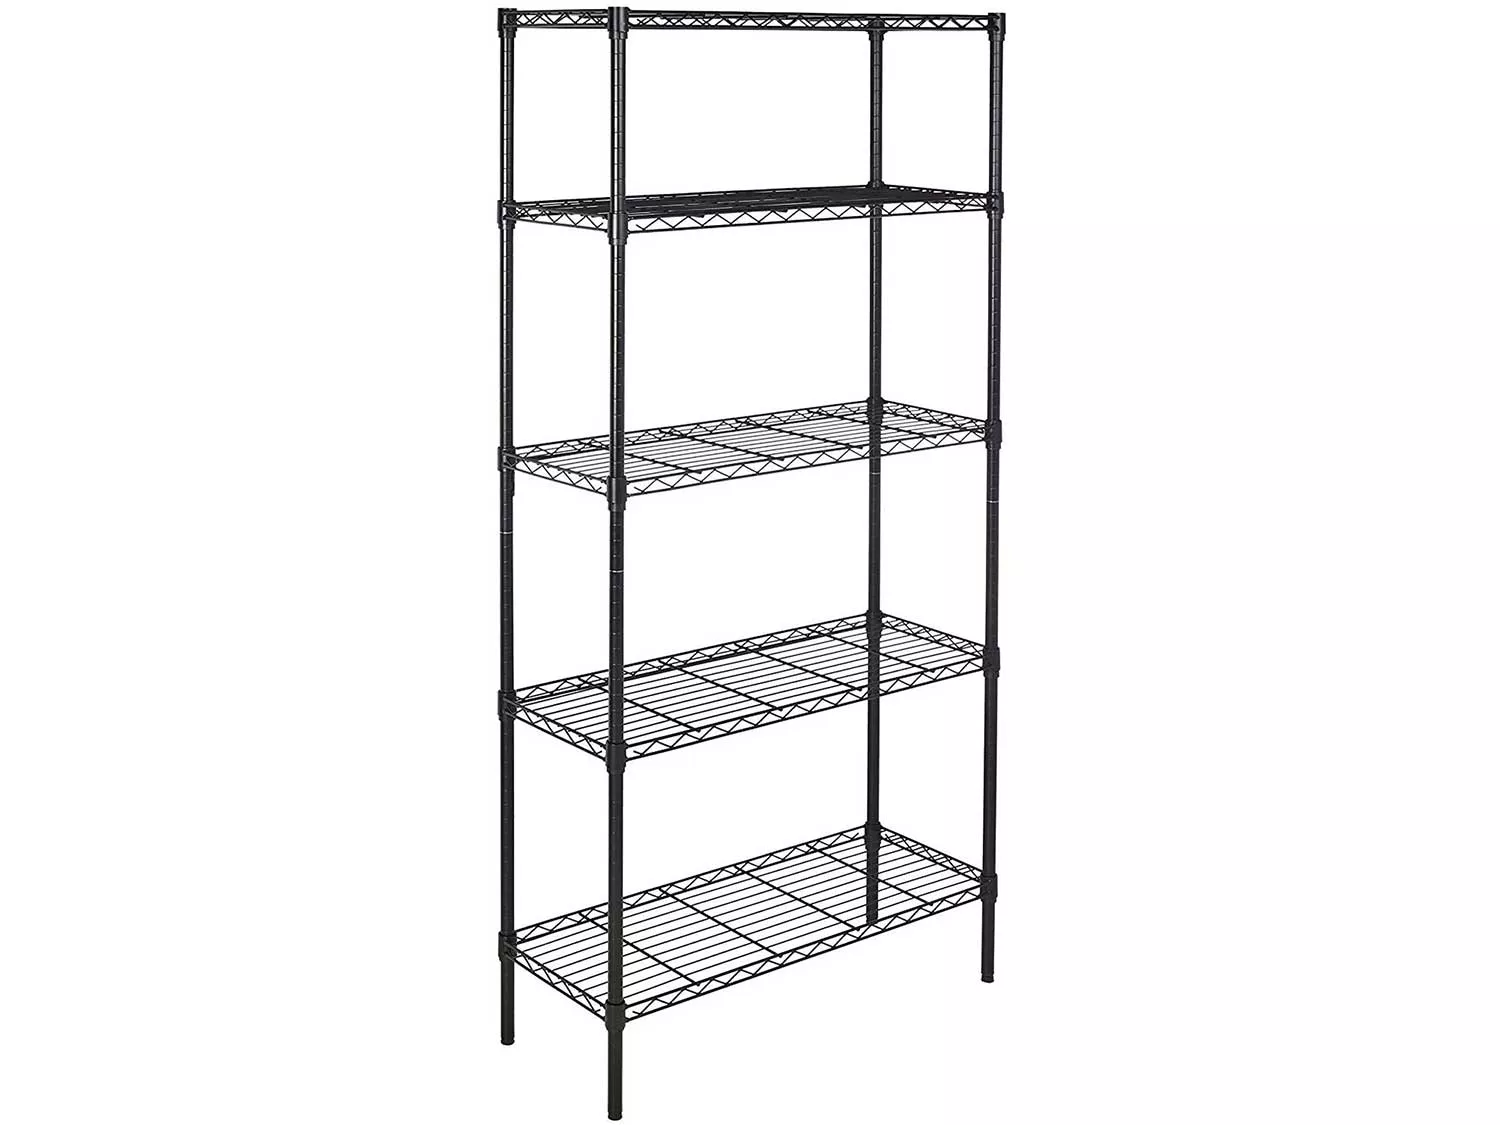 AmazonBasics 5-Shelf Adjustable, Storage Shelving Unit, Steel Organizer Wire Rack, Black